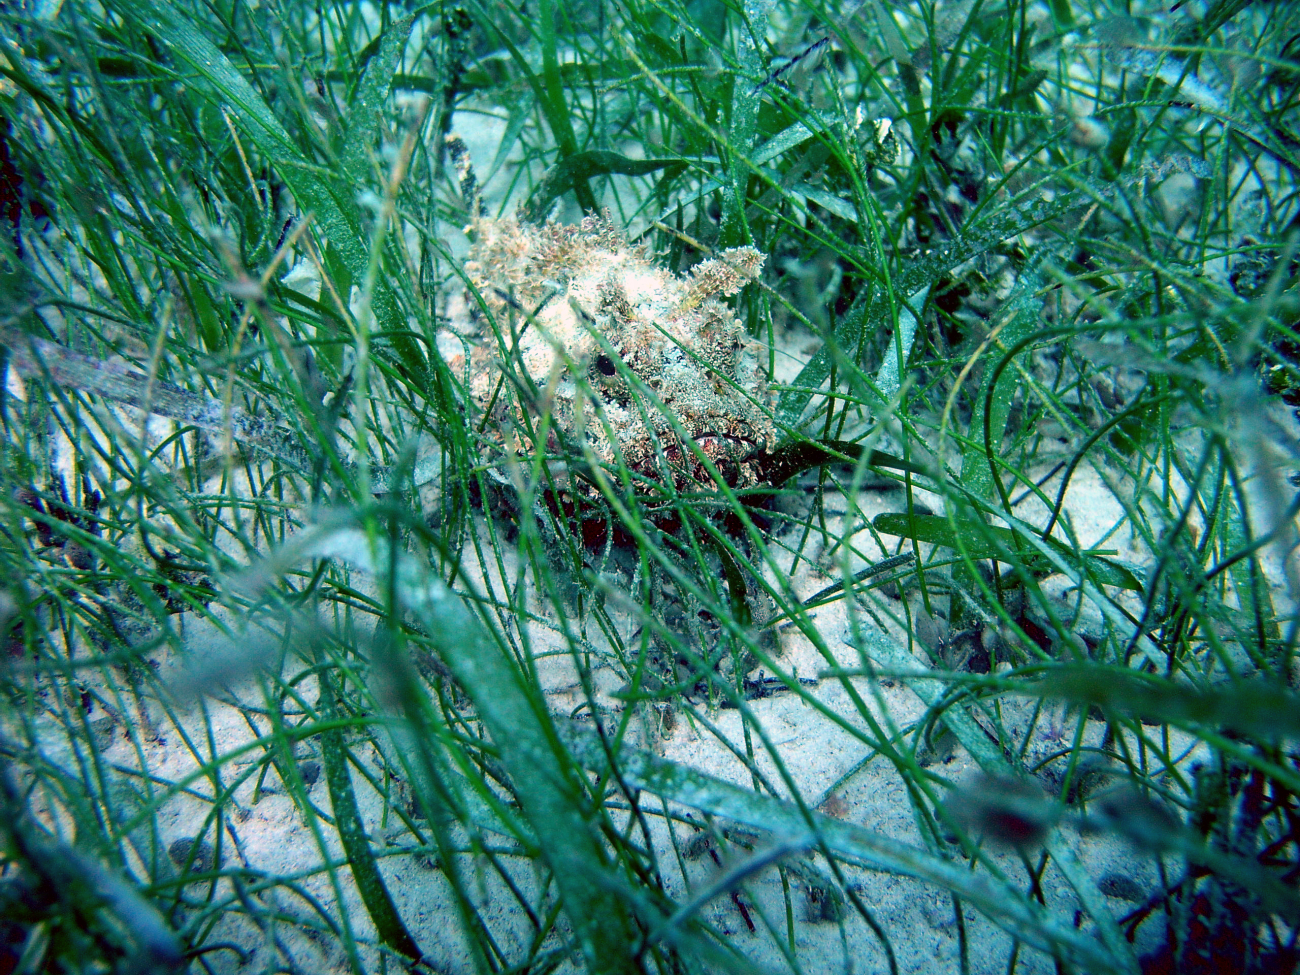 Spotted scorpionfish (Scorpaena plumieri) and manatee grassisoetifolium)